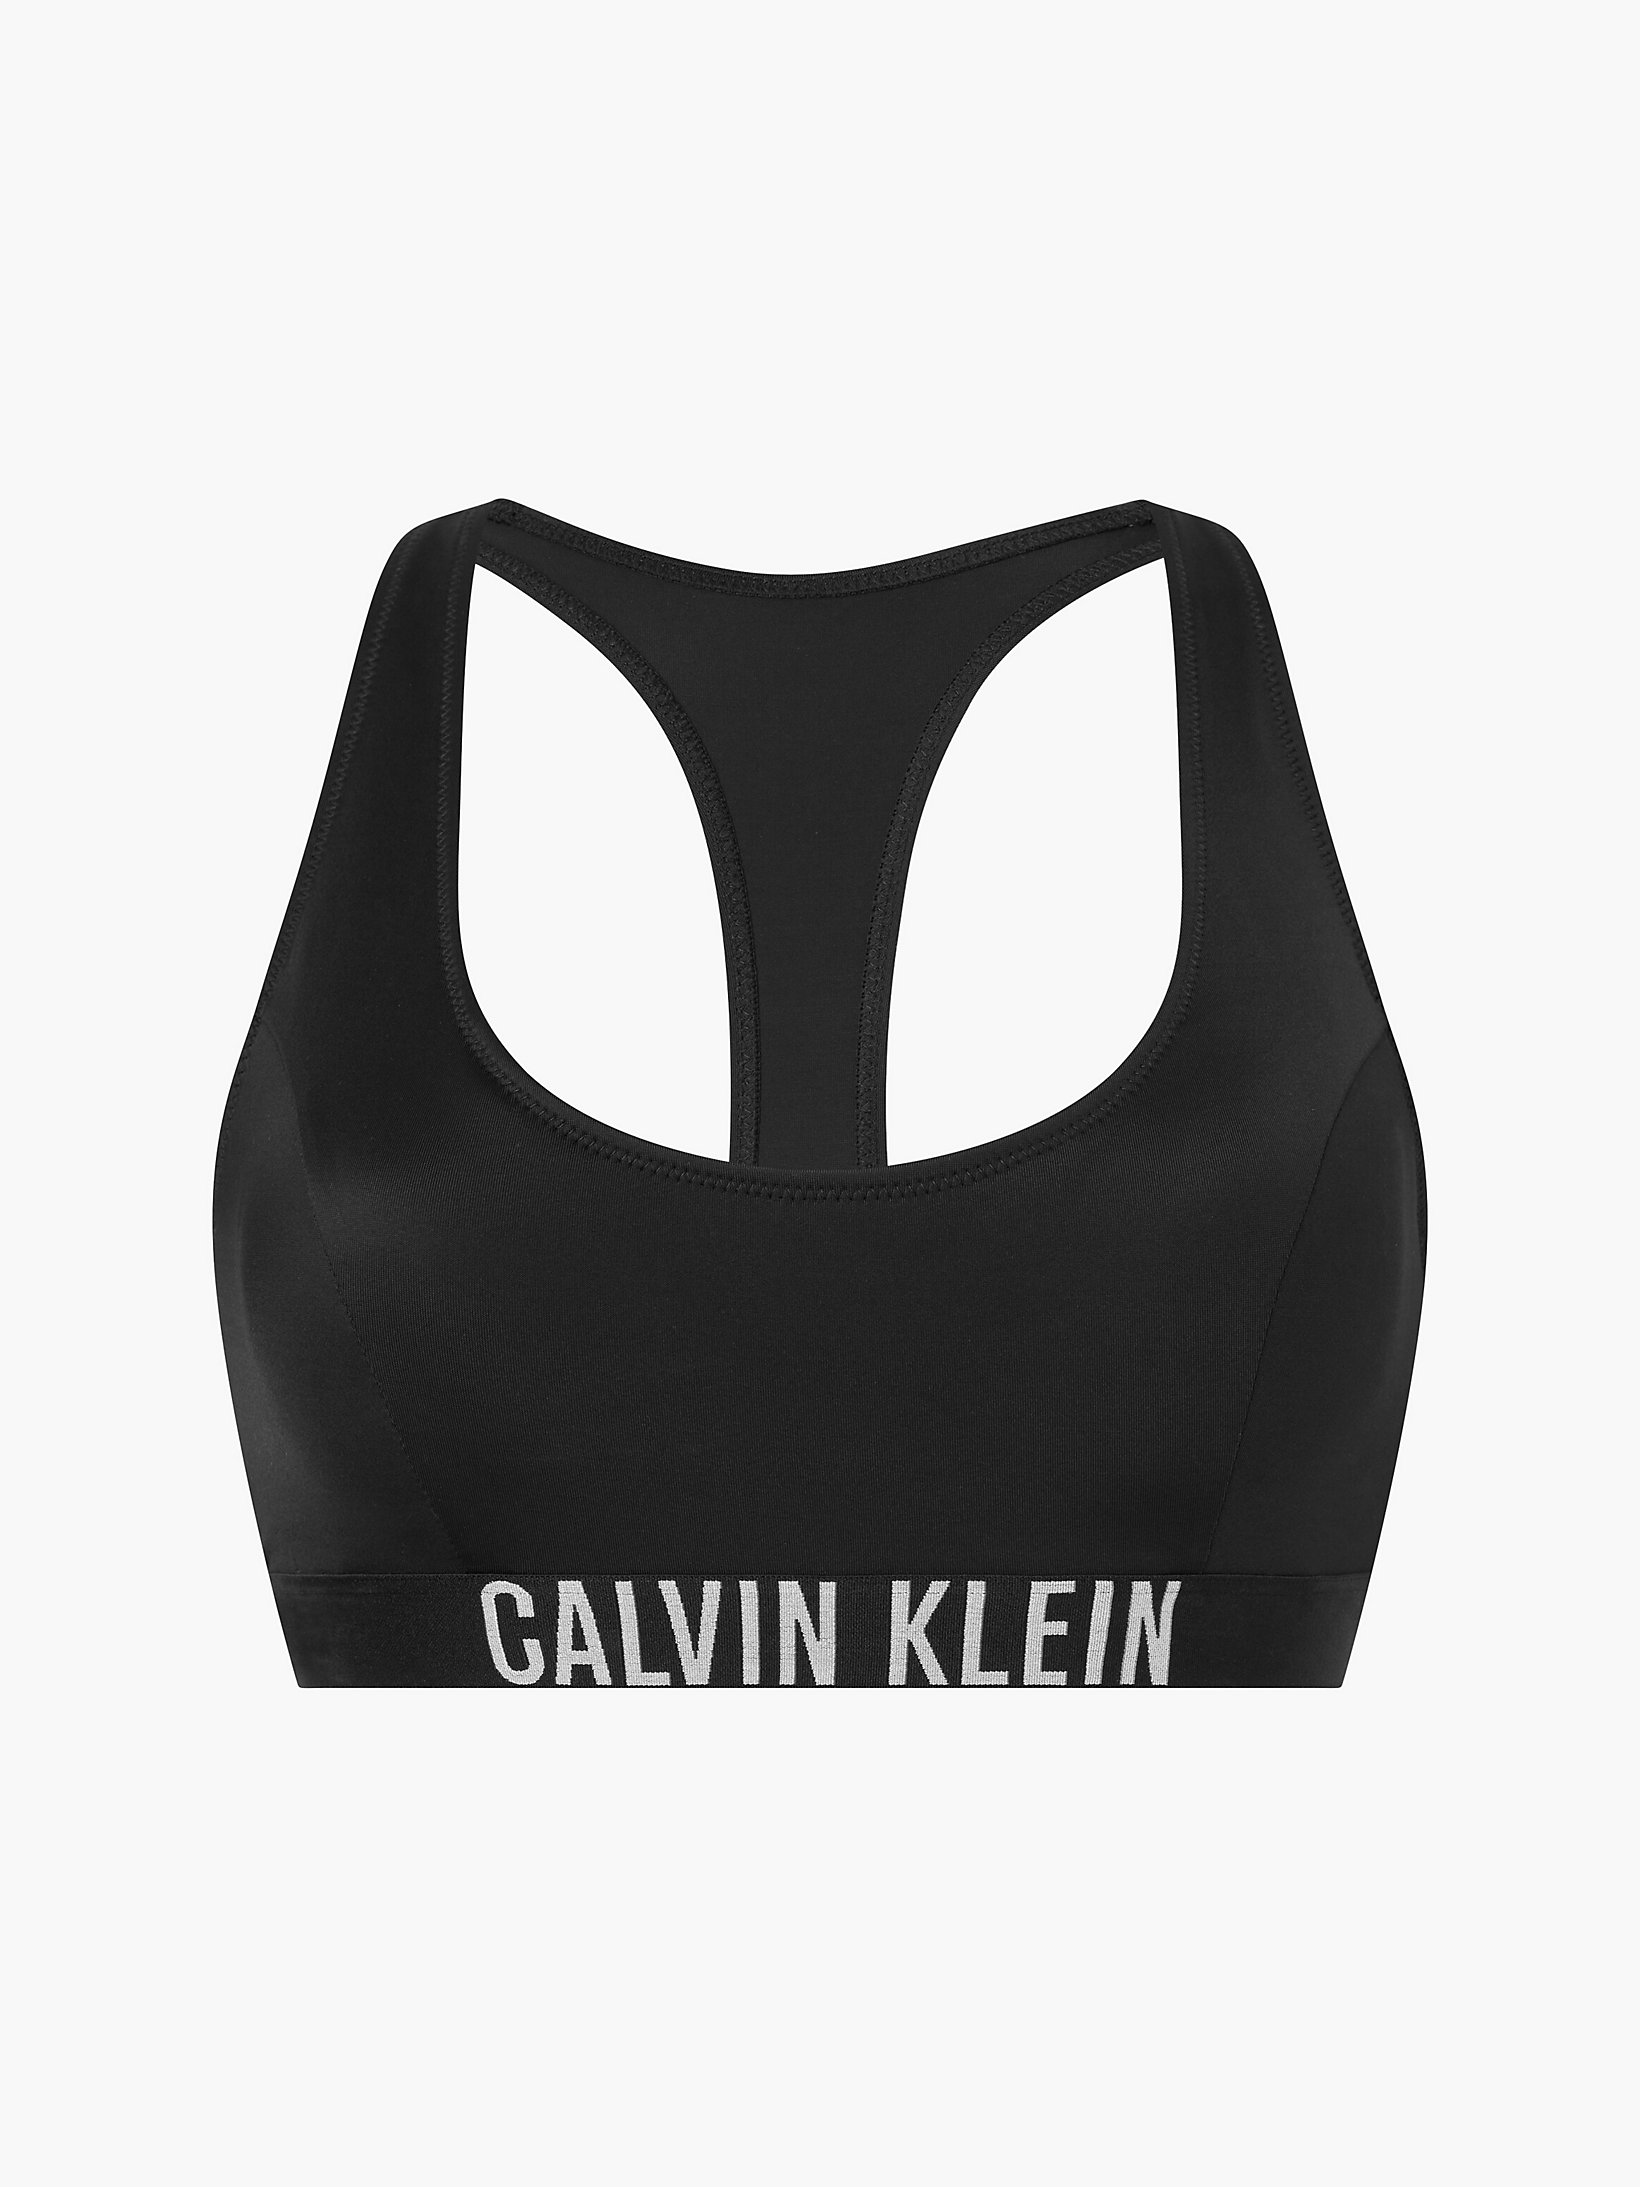 Pvh Black Bralette Bikini Top - Intense Power undefined women Calvin Klein